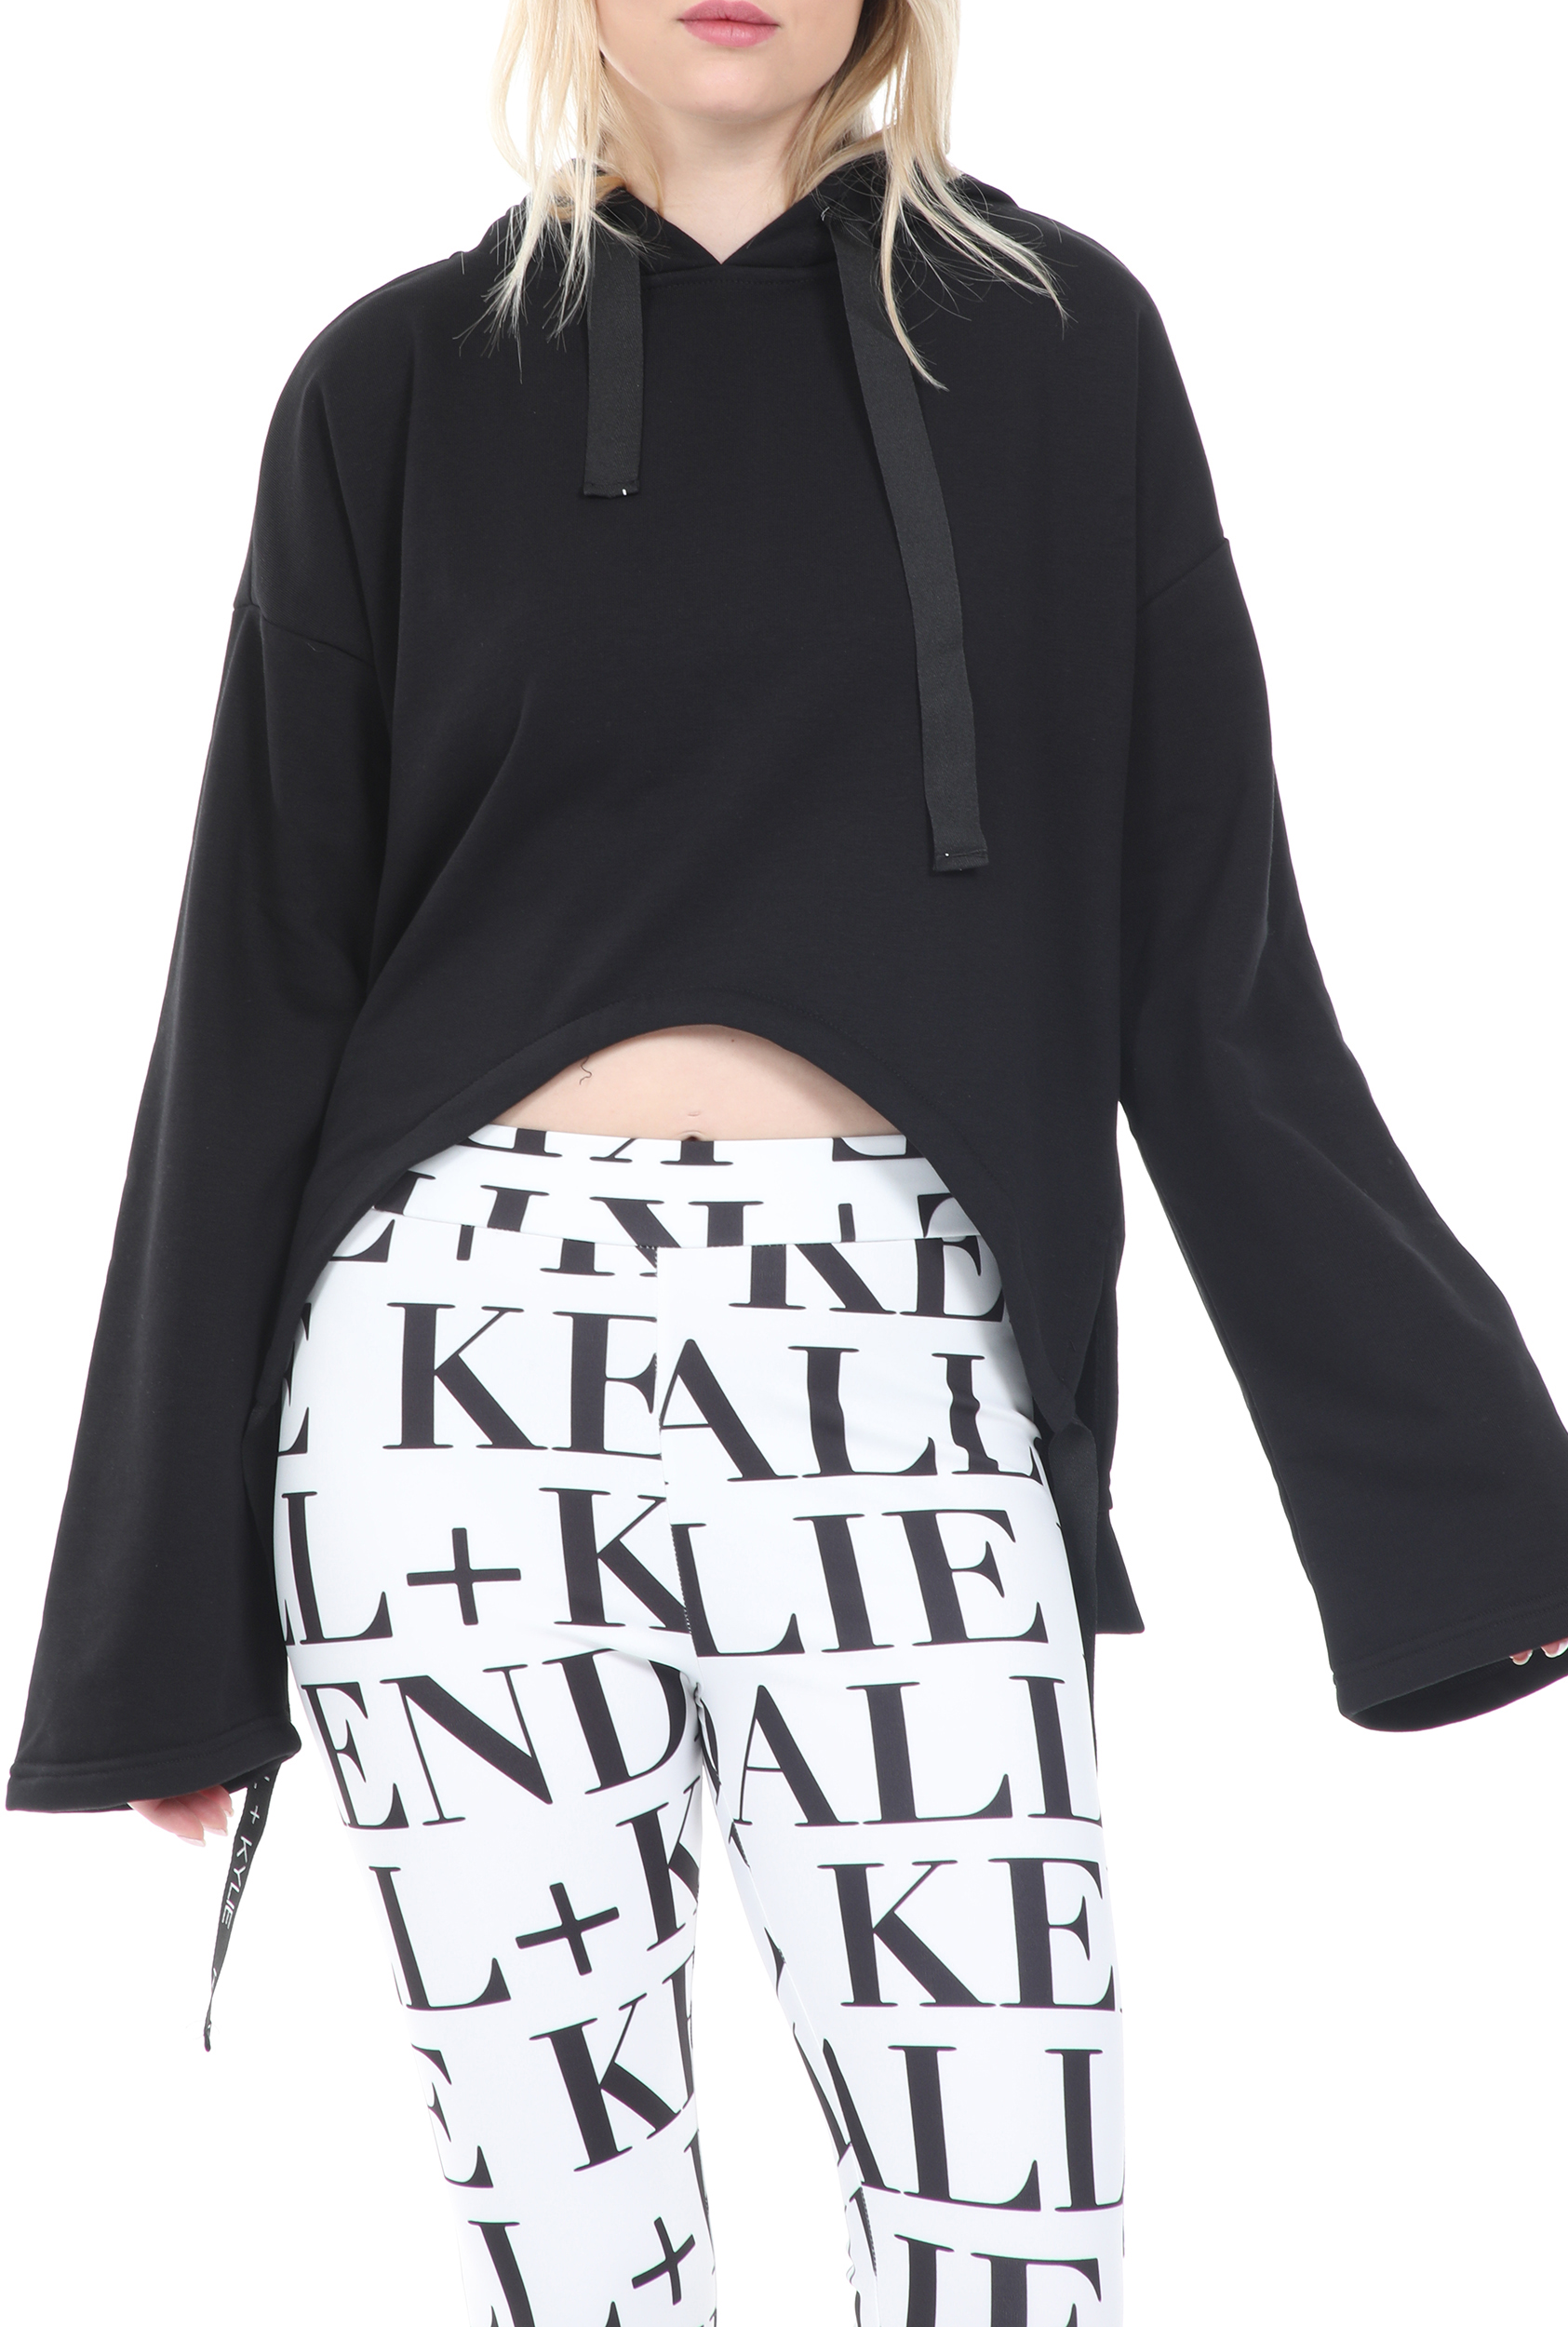 KENDALL + KYLIE – Γυναικεία φούτερ μπλούζα KENDALL + KYLIE ACTIVE CROPPED HOODED μαύρη 1811121.0-0071